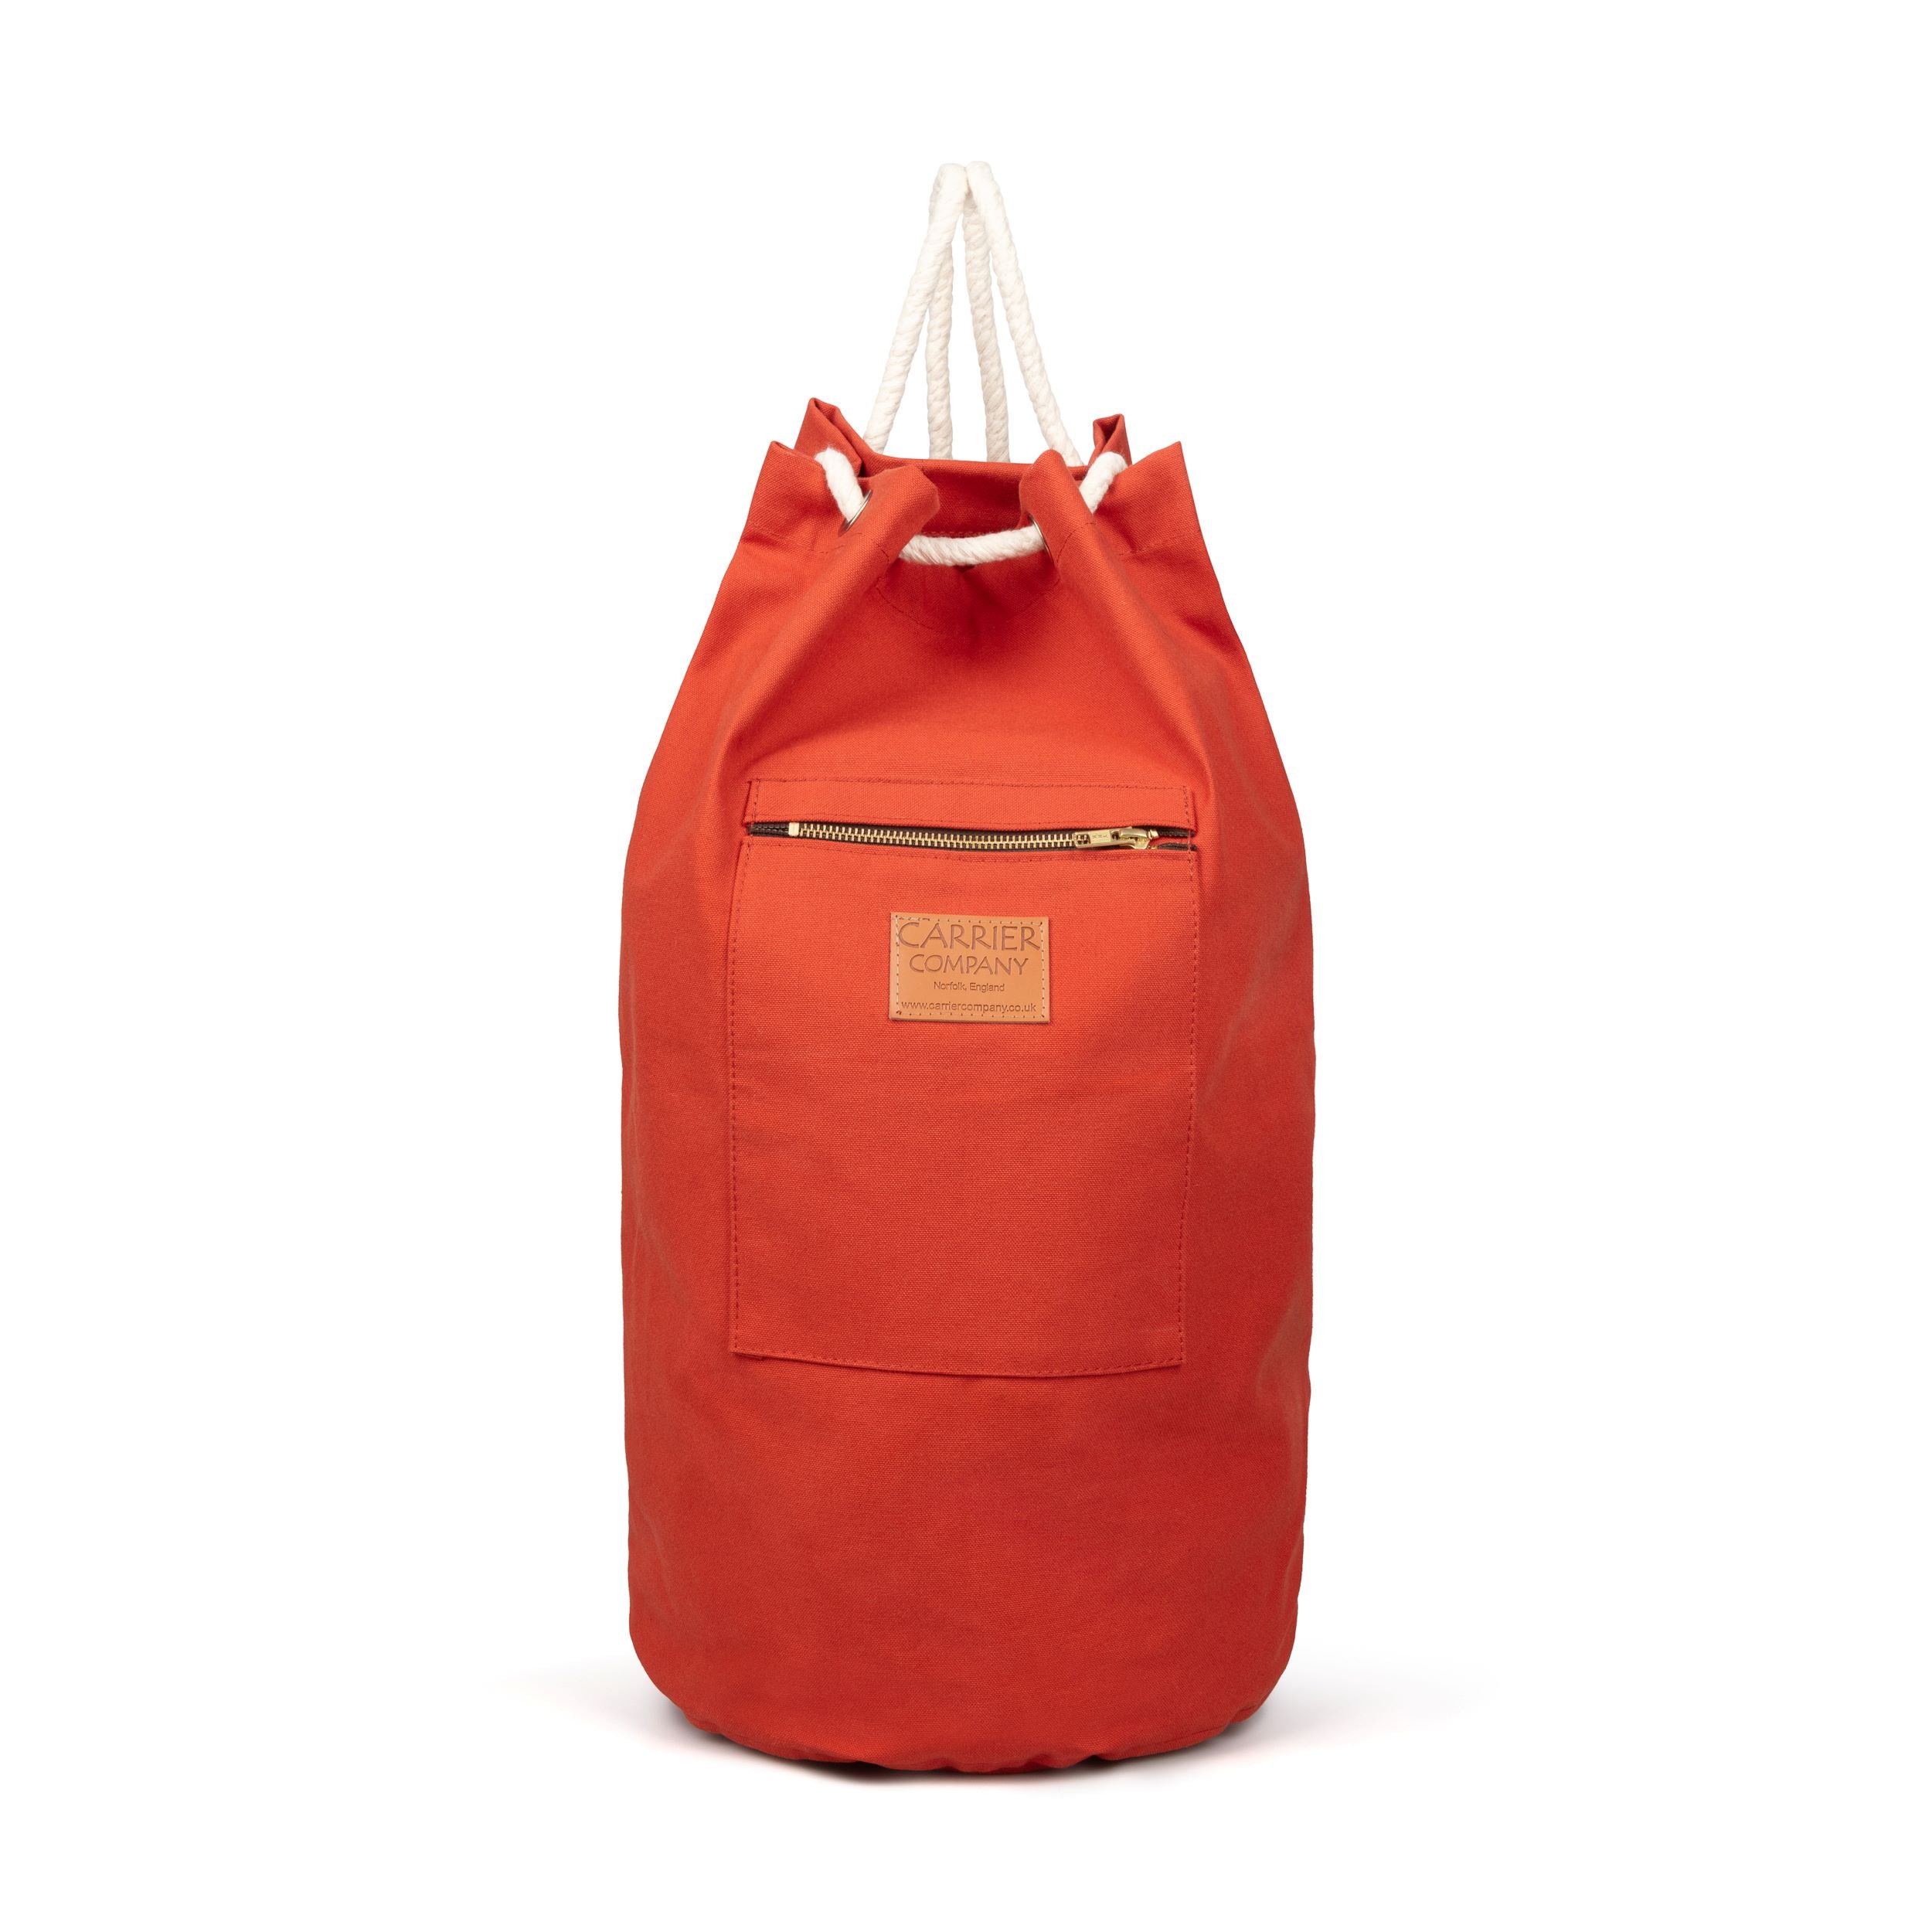 Carrier Company Duffle Bag in Orange